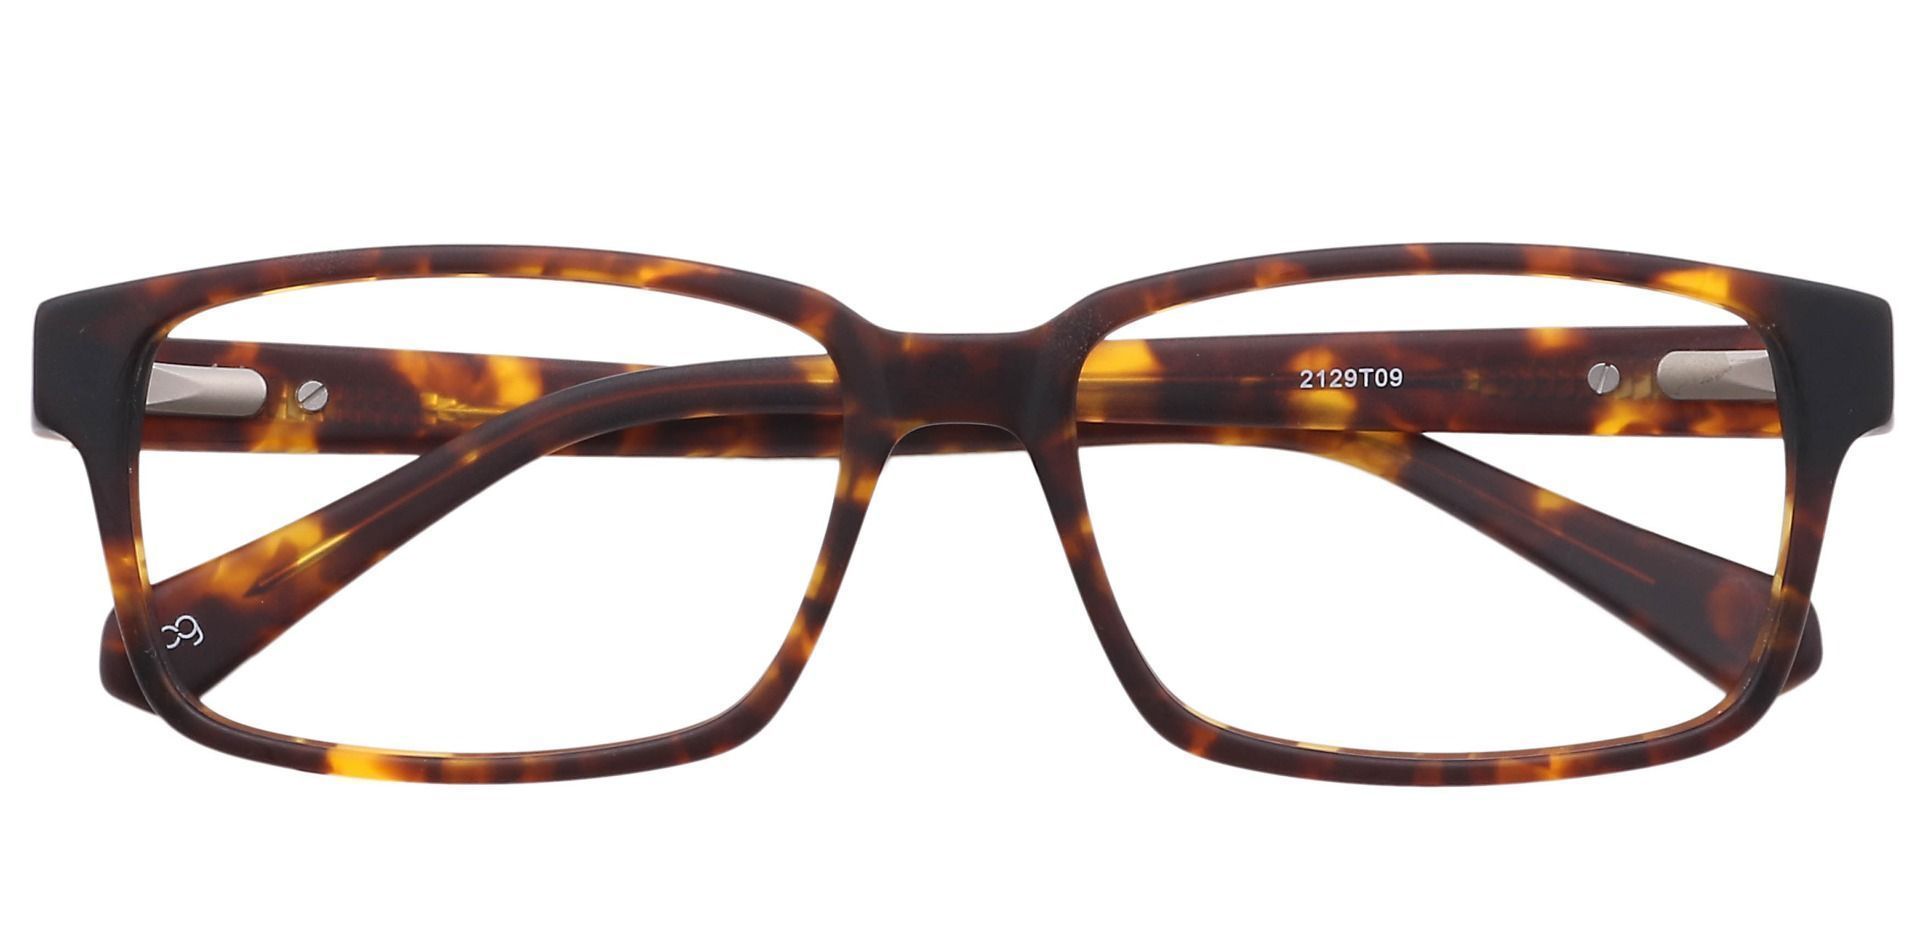 Clifford Rectangle Non-Rx Glasses - Tortoise